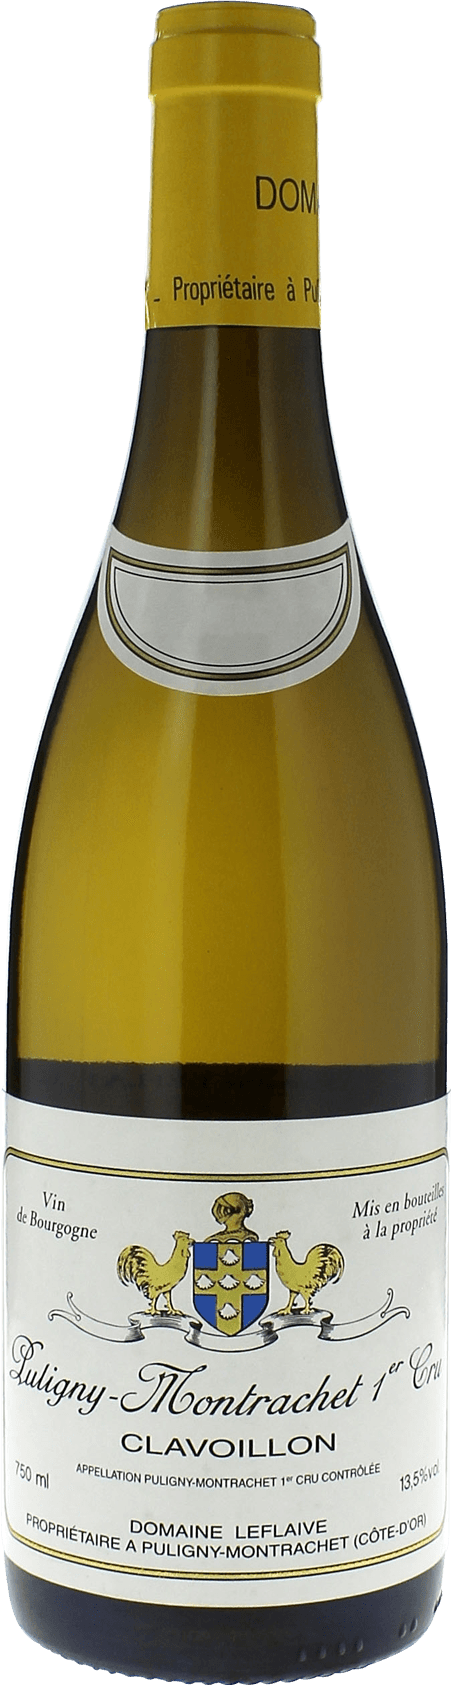 Puligny montrachet 1er cru  clavoillon 2016 Domaine LEFLAIVE, Bourgogne blanc